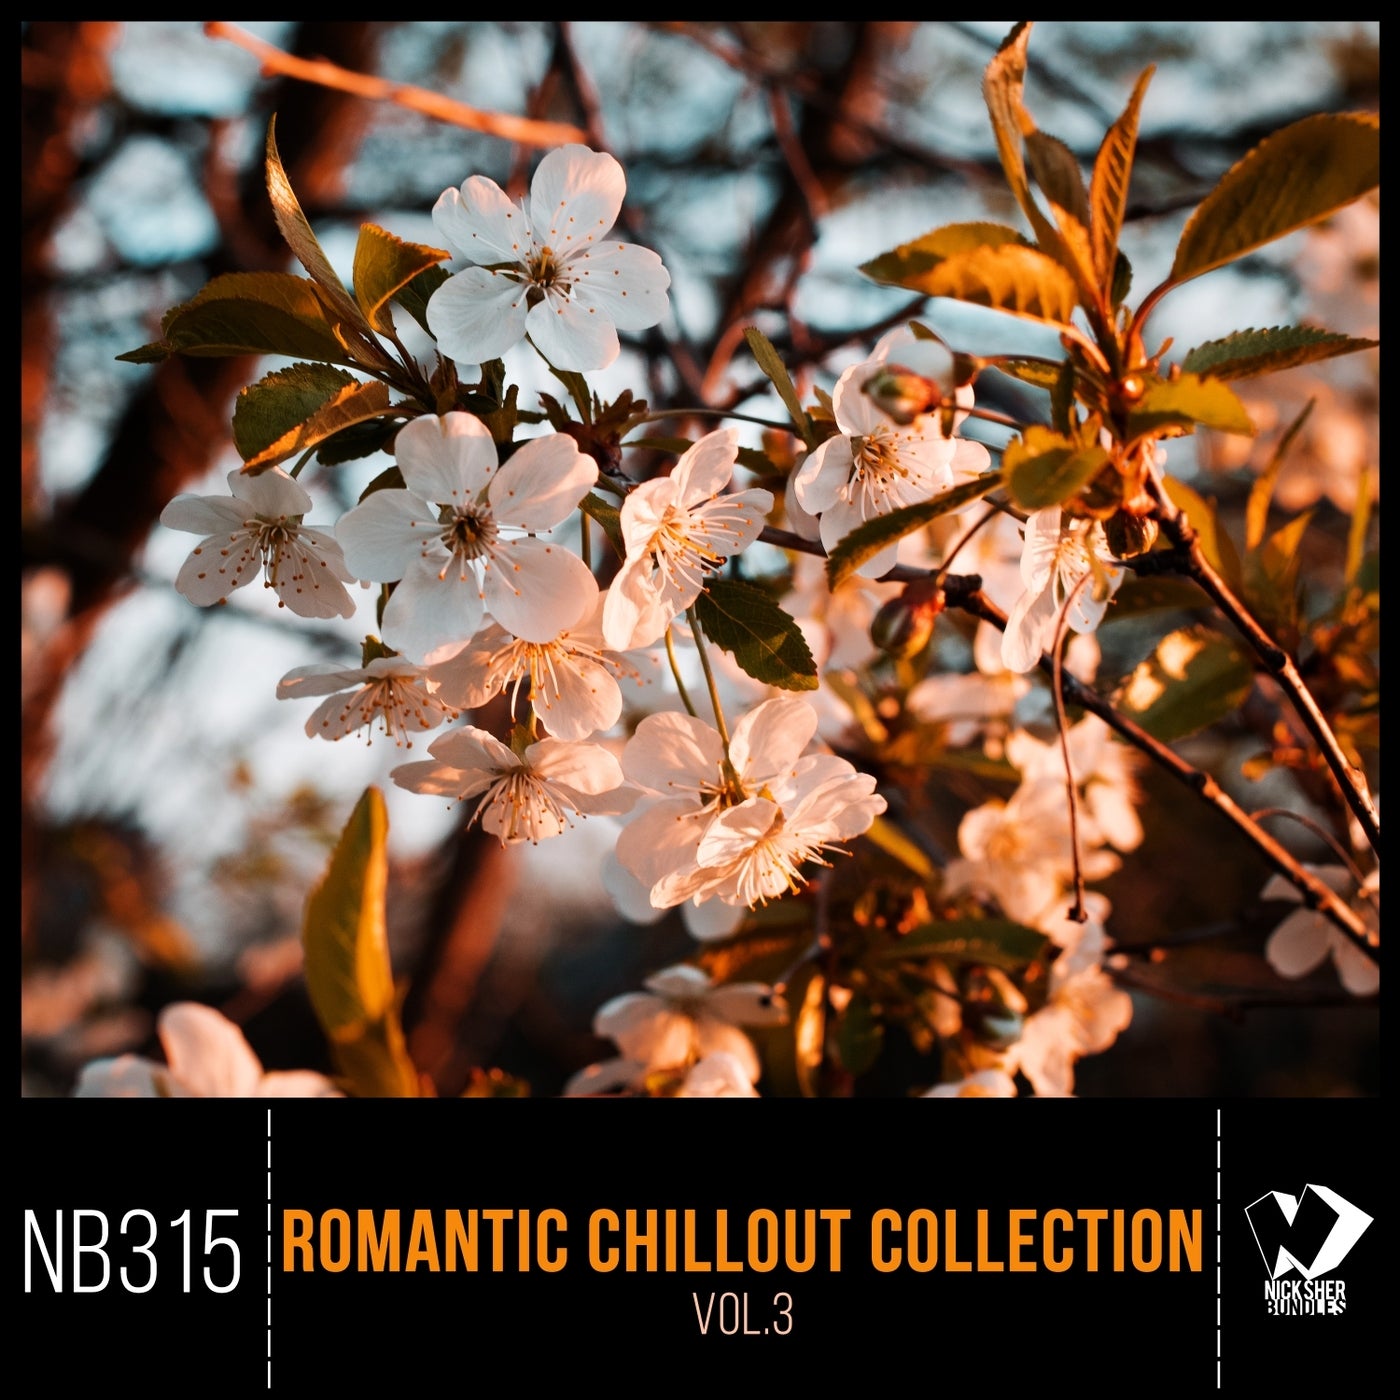 VetLove, Mike Drozdov – Romantic Chillout Collection, Vol. 3 [NB315]